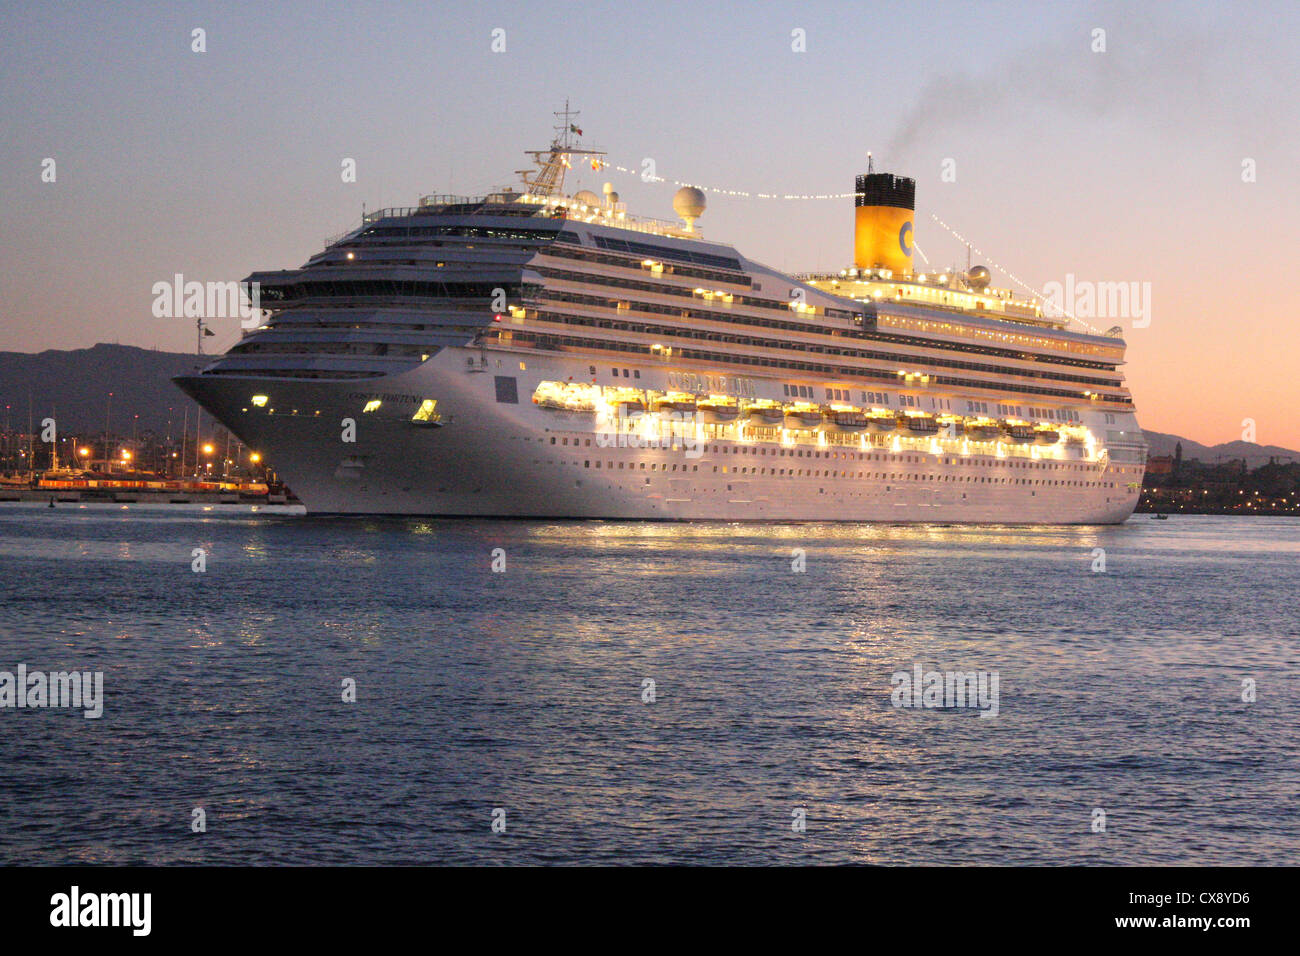 Costa Cruise Lines Cruise Ship 'Costa Fortuna' during early morning arrival into the Port of Palma de Mallorca / Majorca Stock Photo